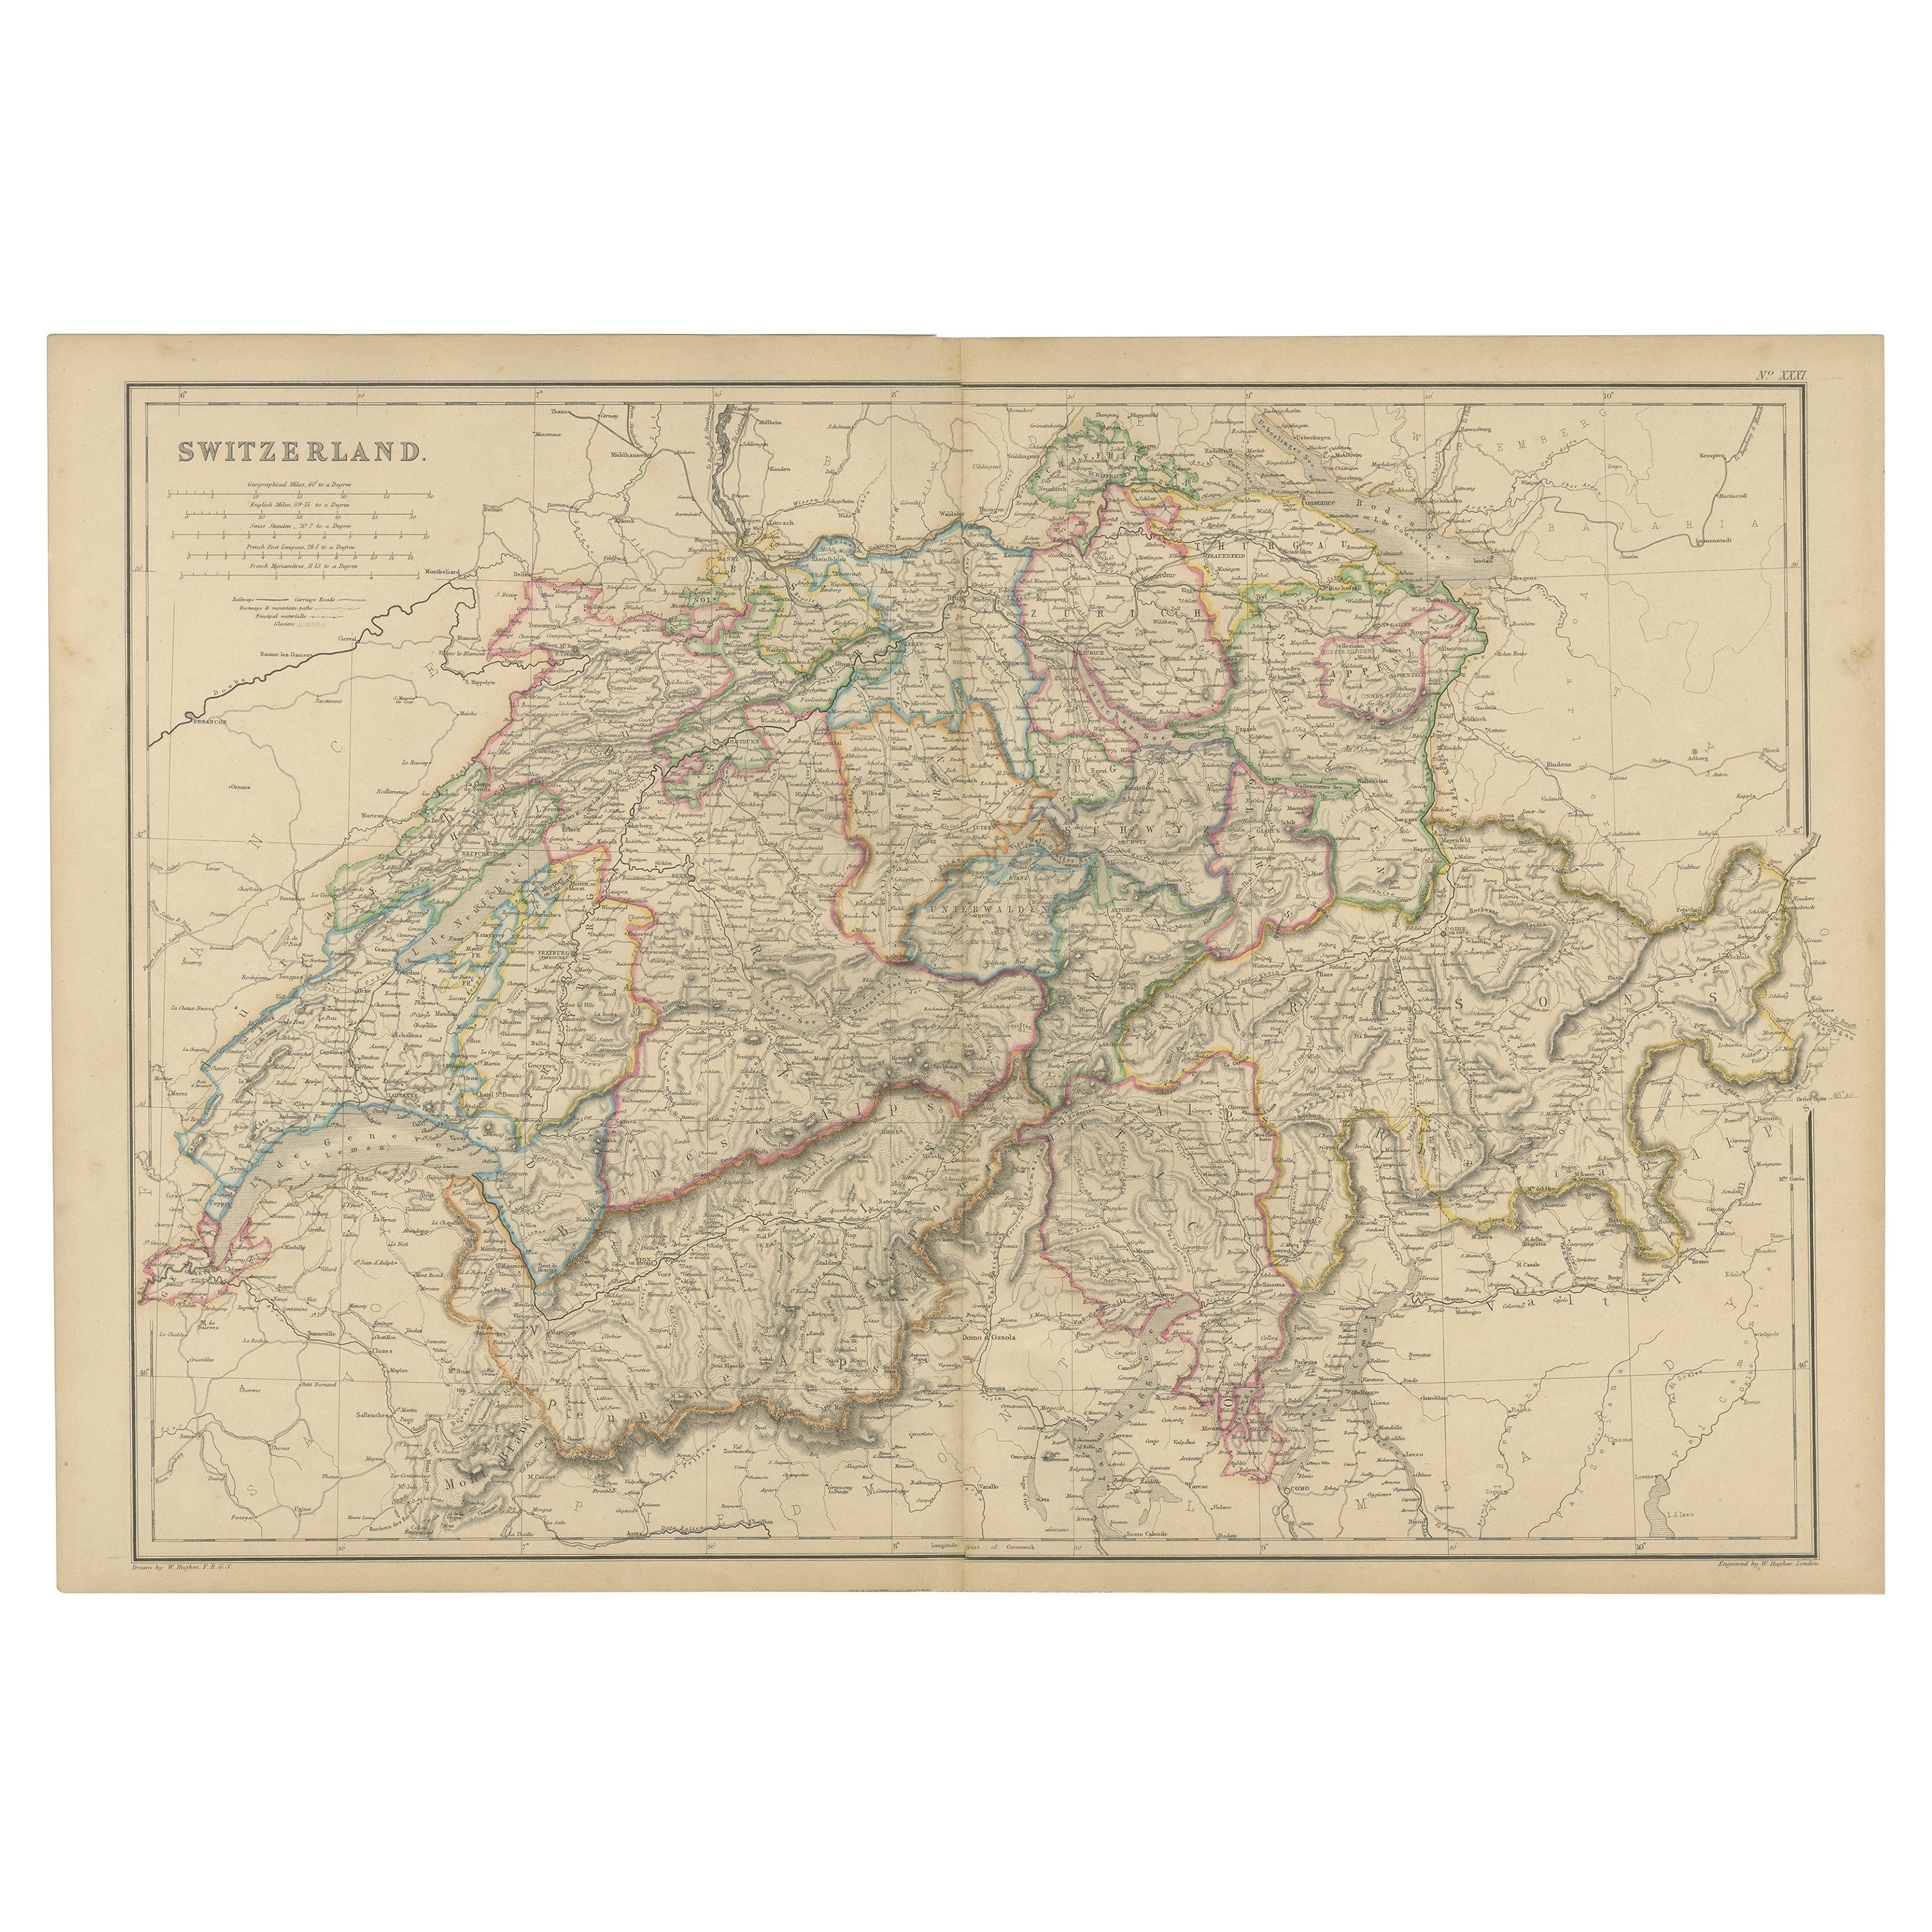 Antique Map of Switzerland by W. G. Blackie, 1859